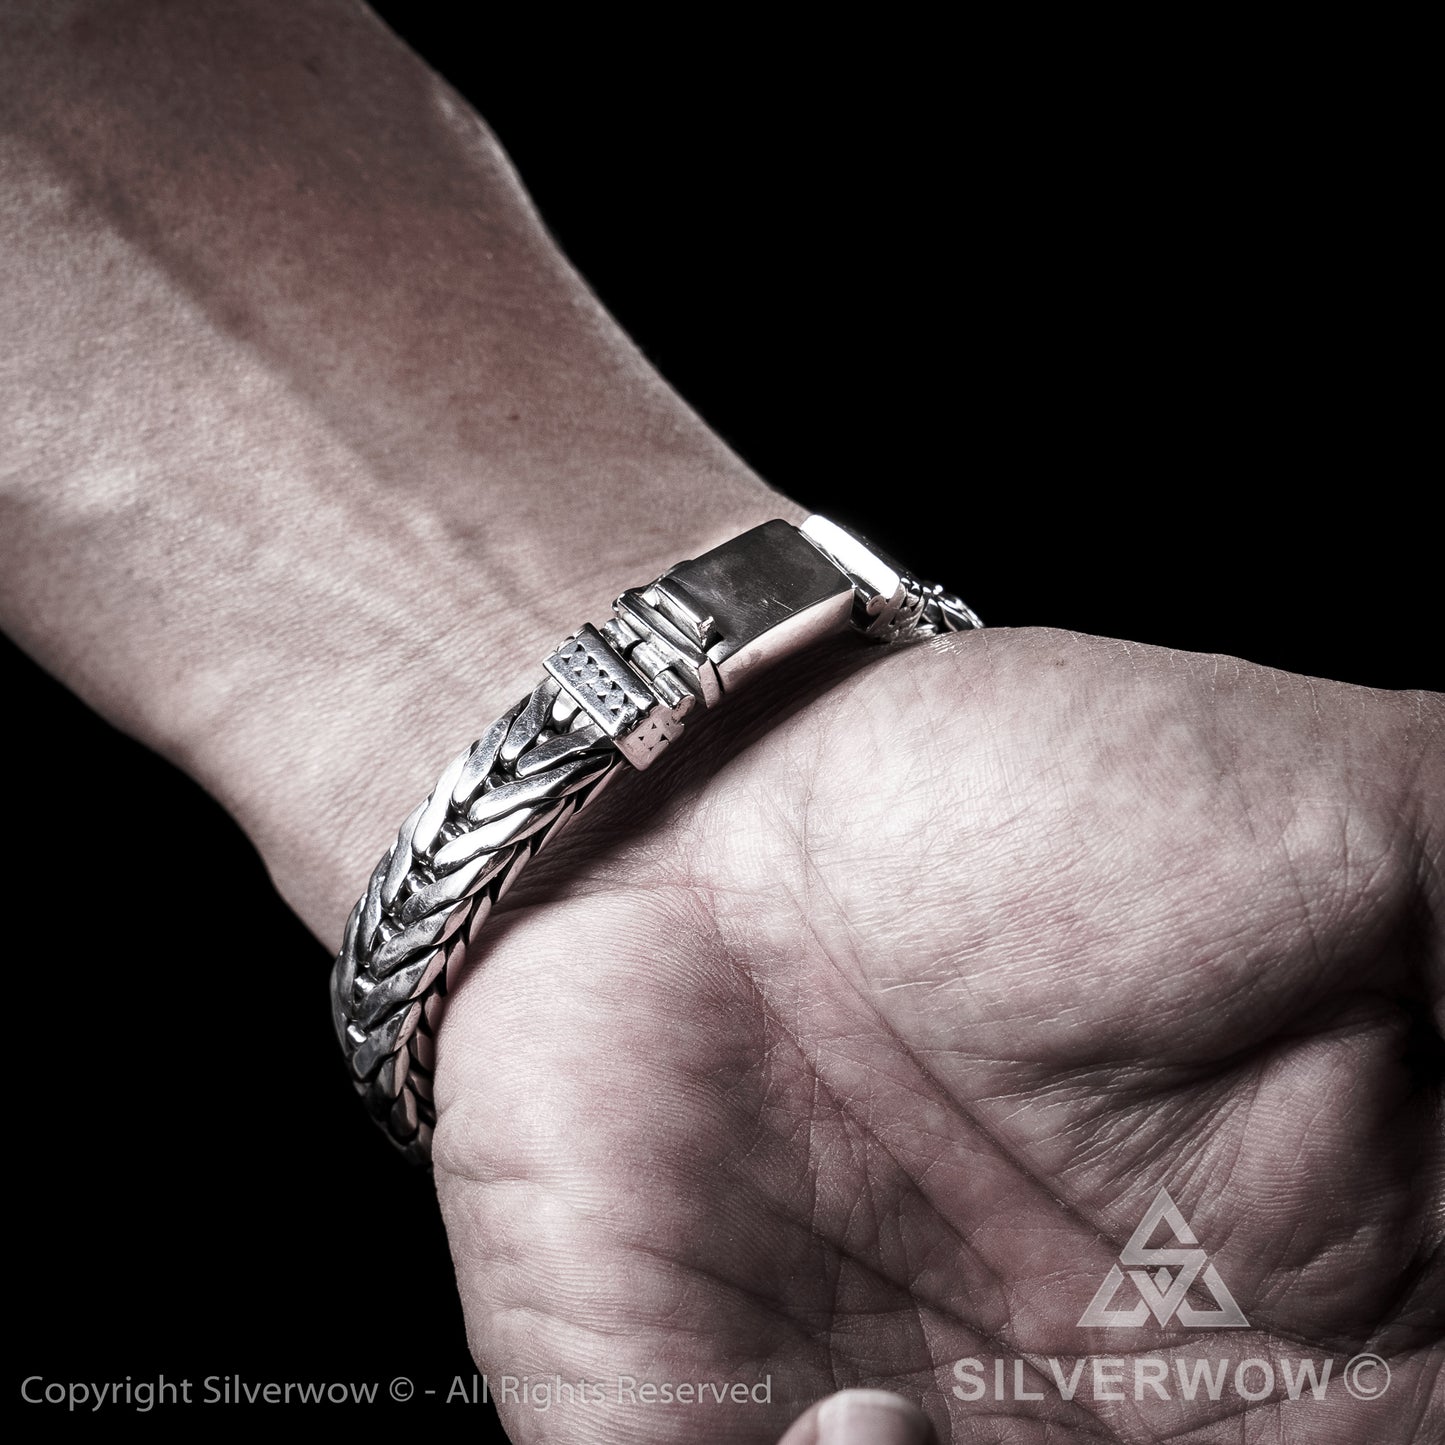 11mm Chevron Bracelet